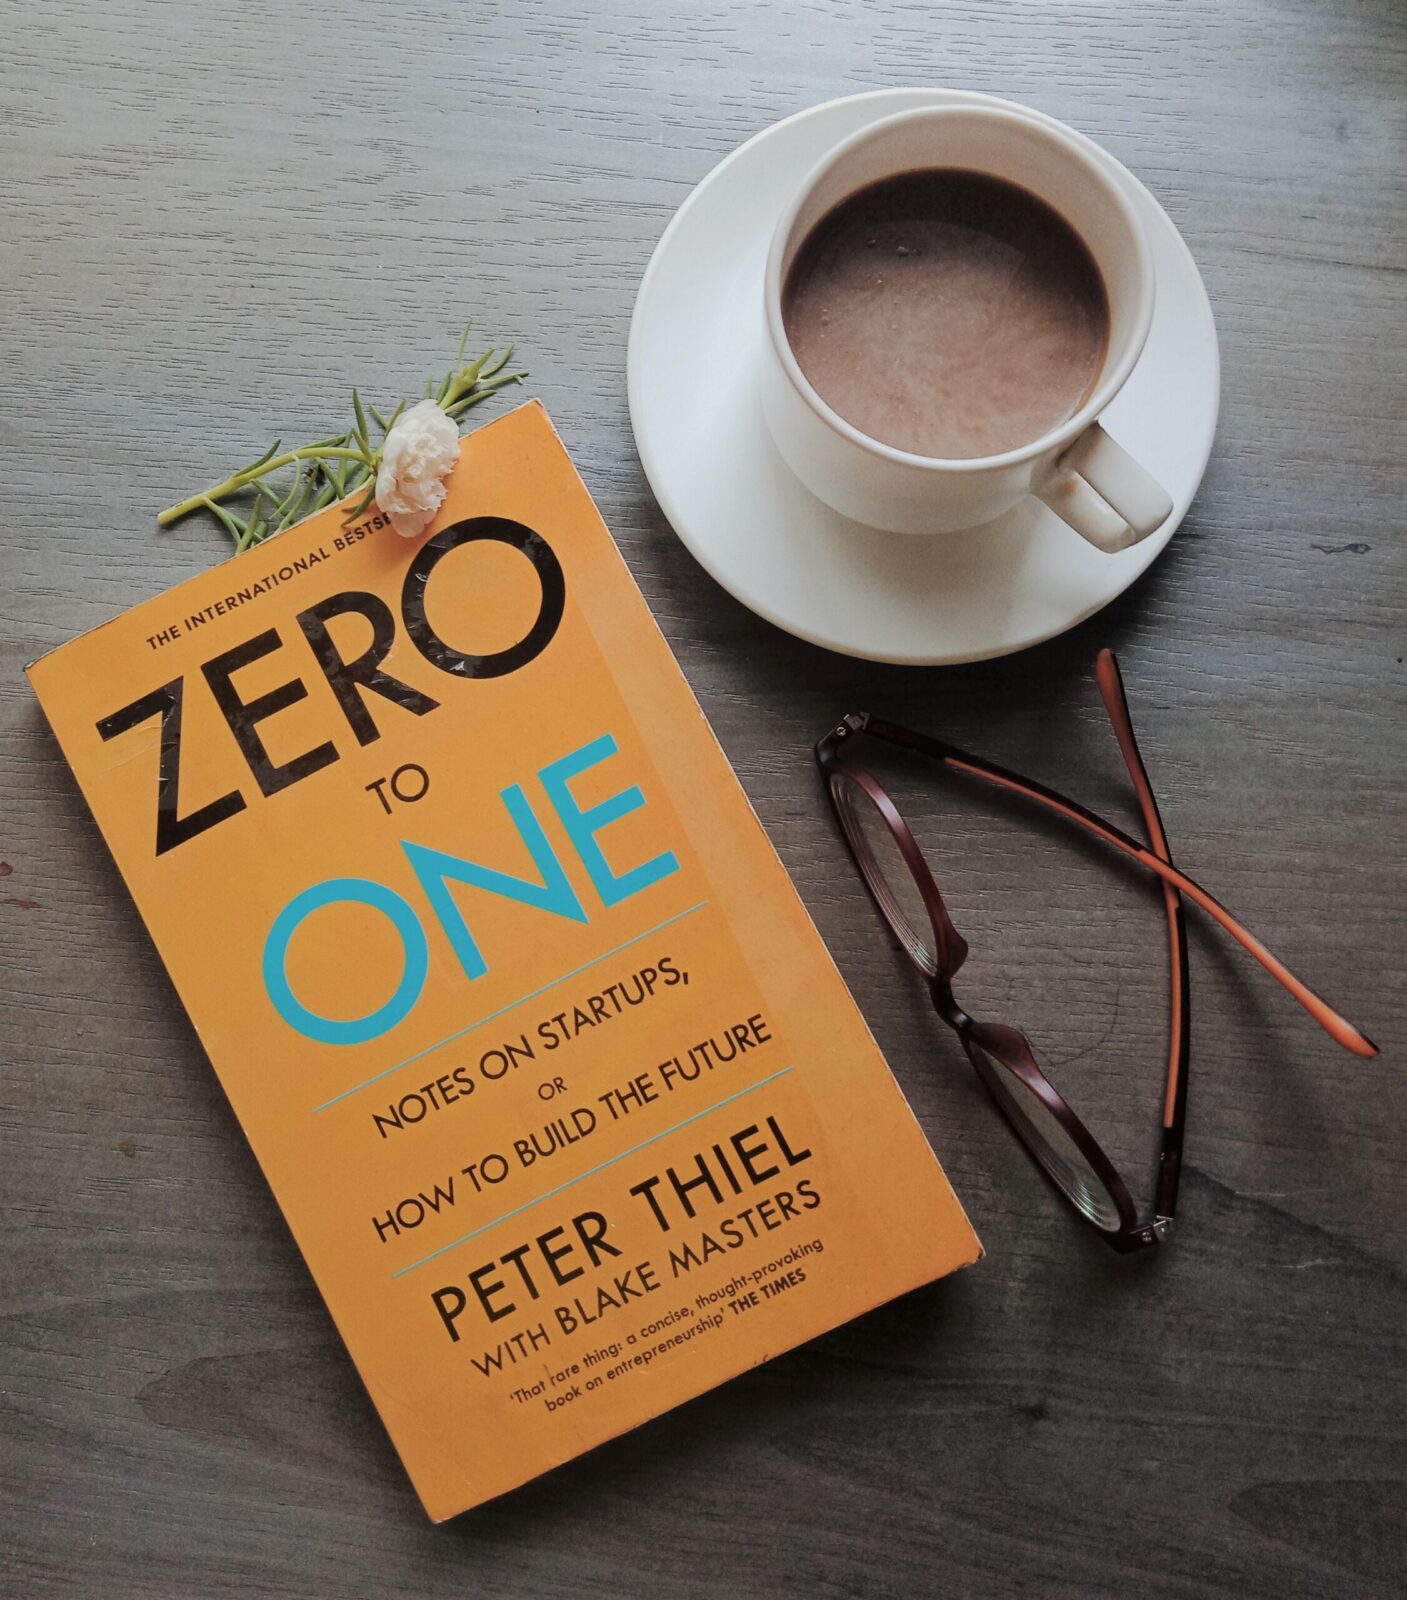 zero to one by peter thiel pdf free download